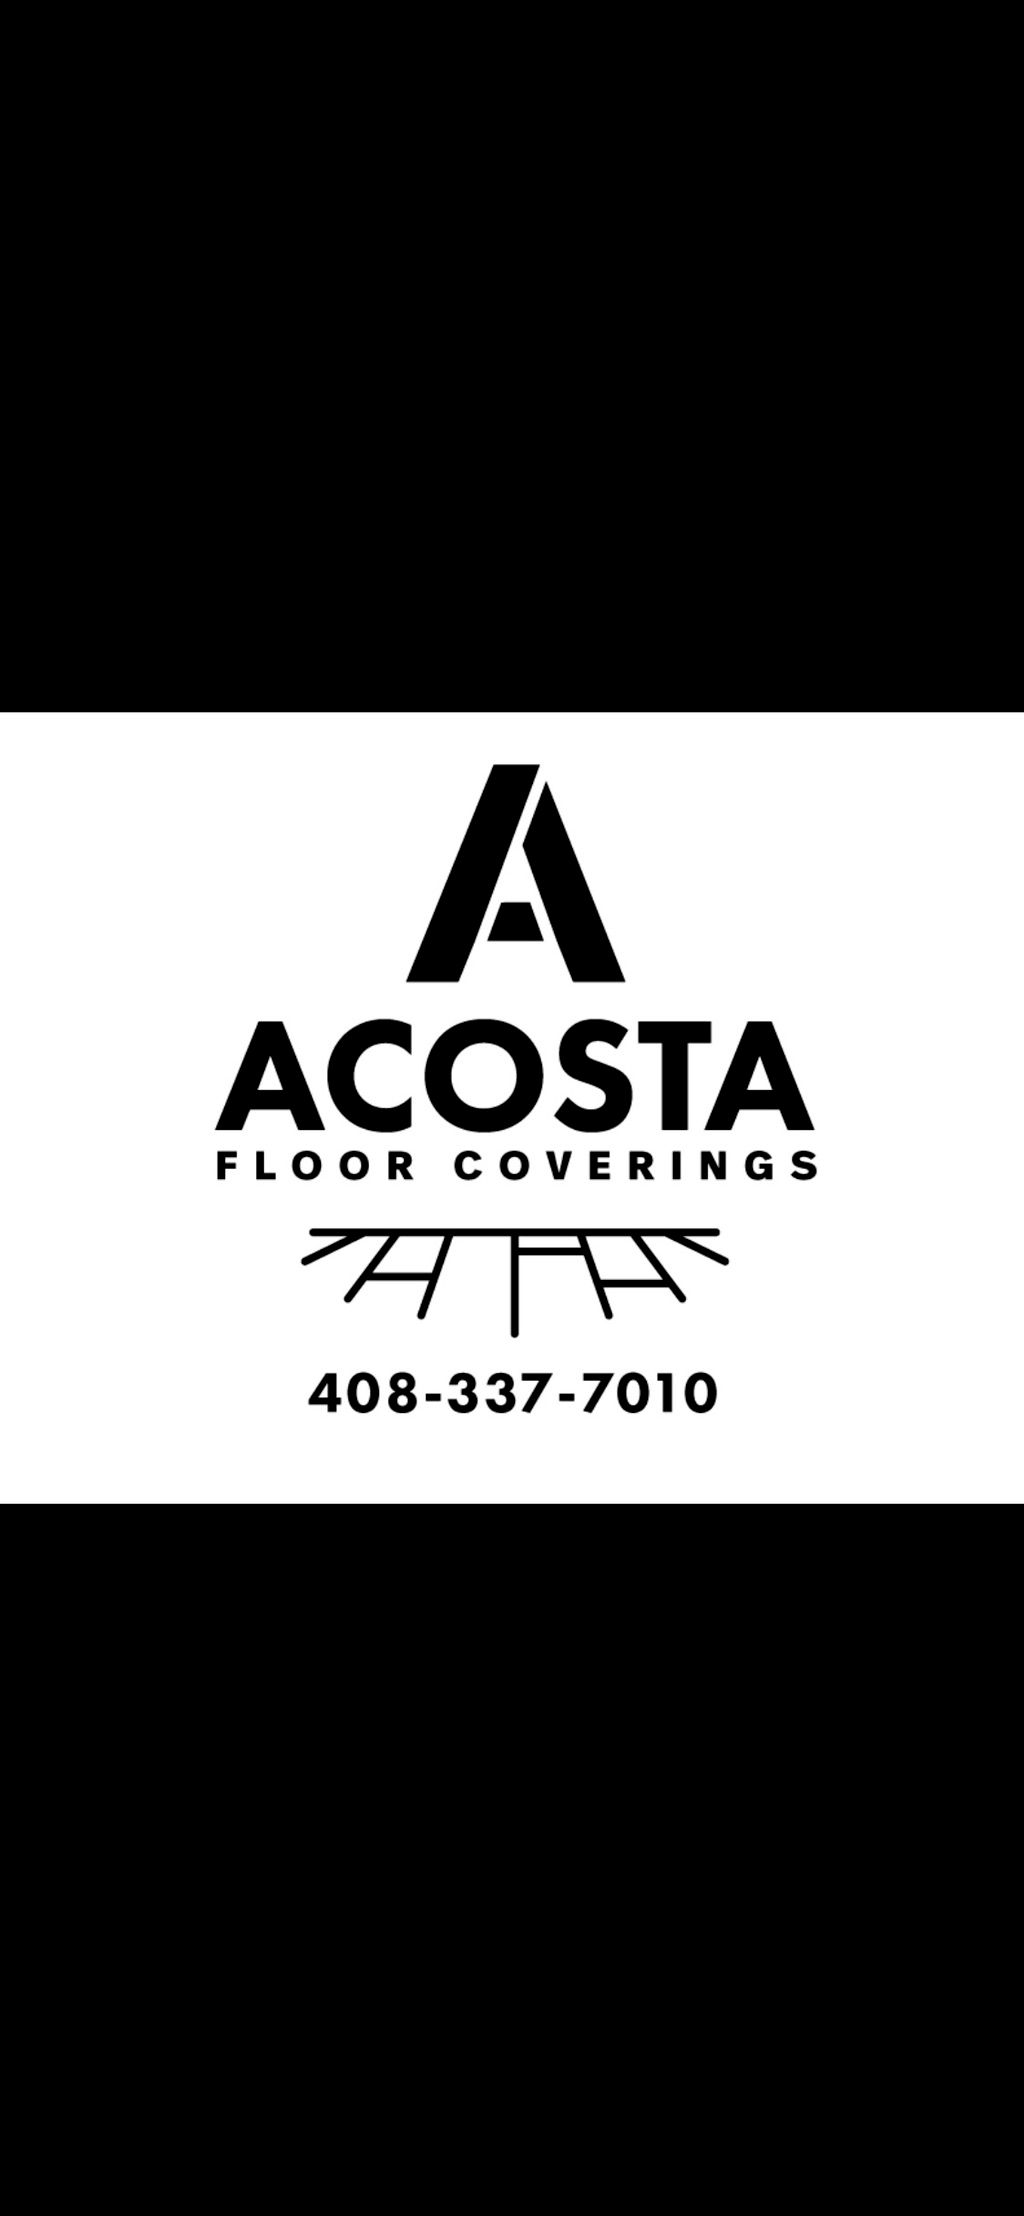 Acosta Floor Coverings